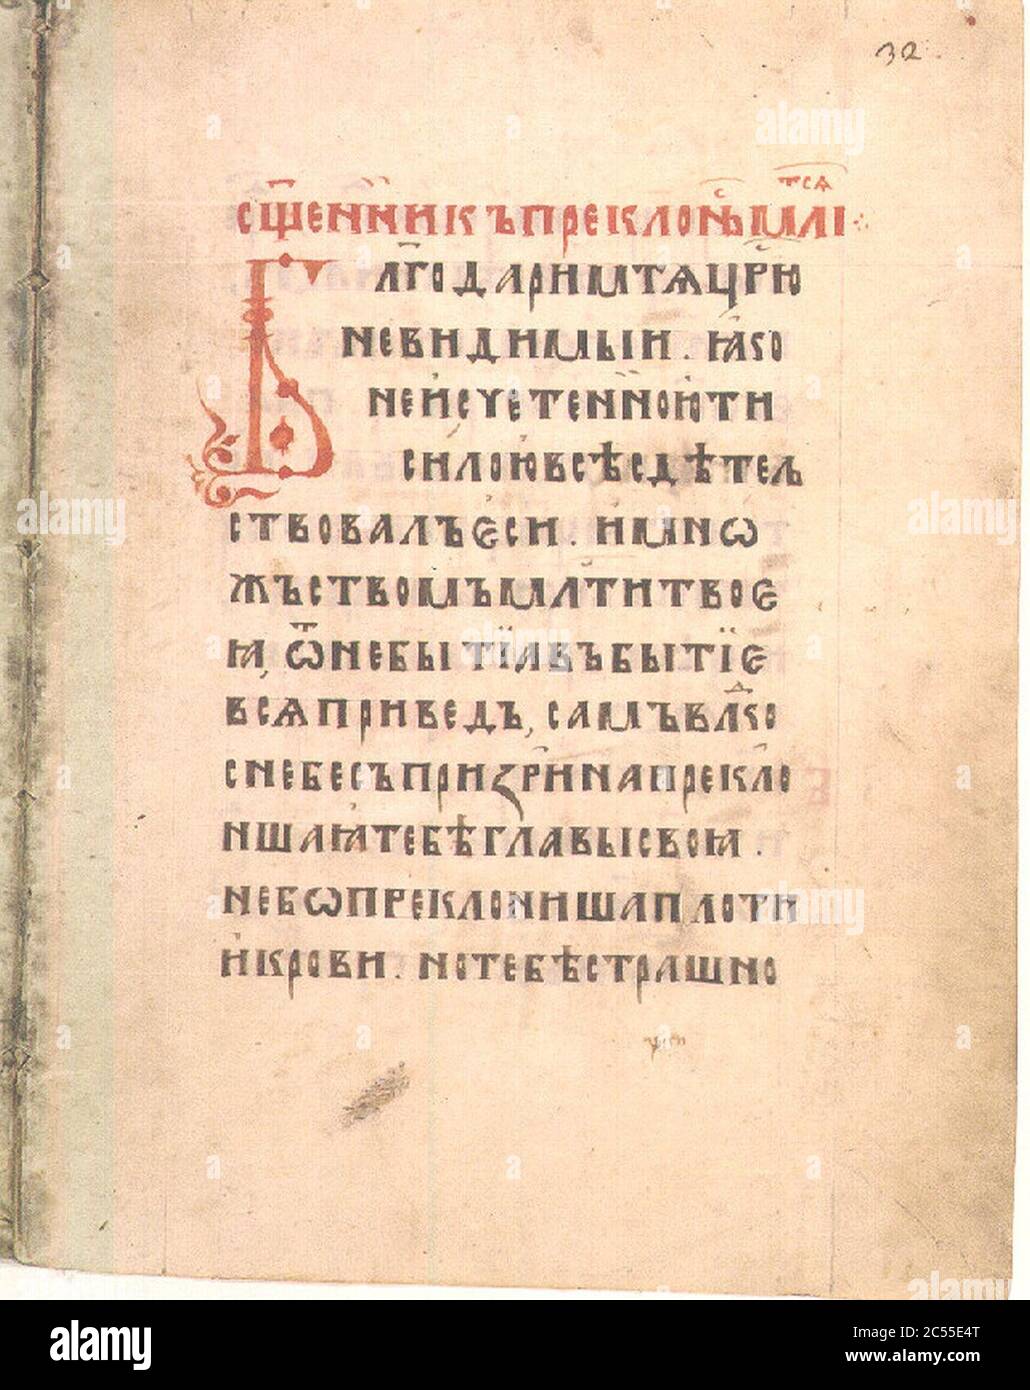 Isidore of Kiev Liturgical Book. Stock Photo